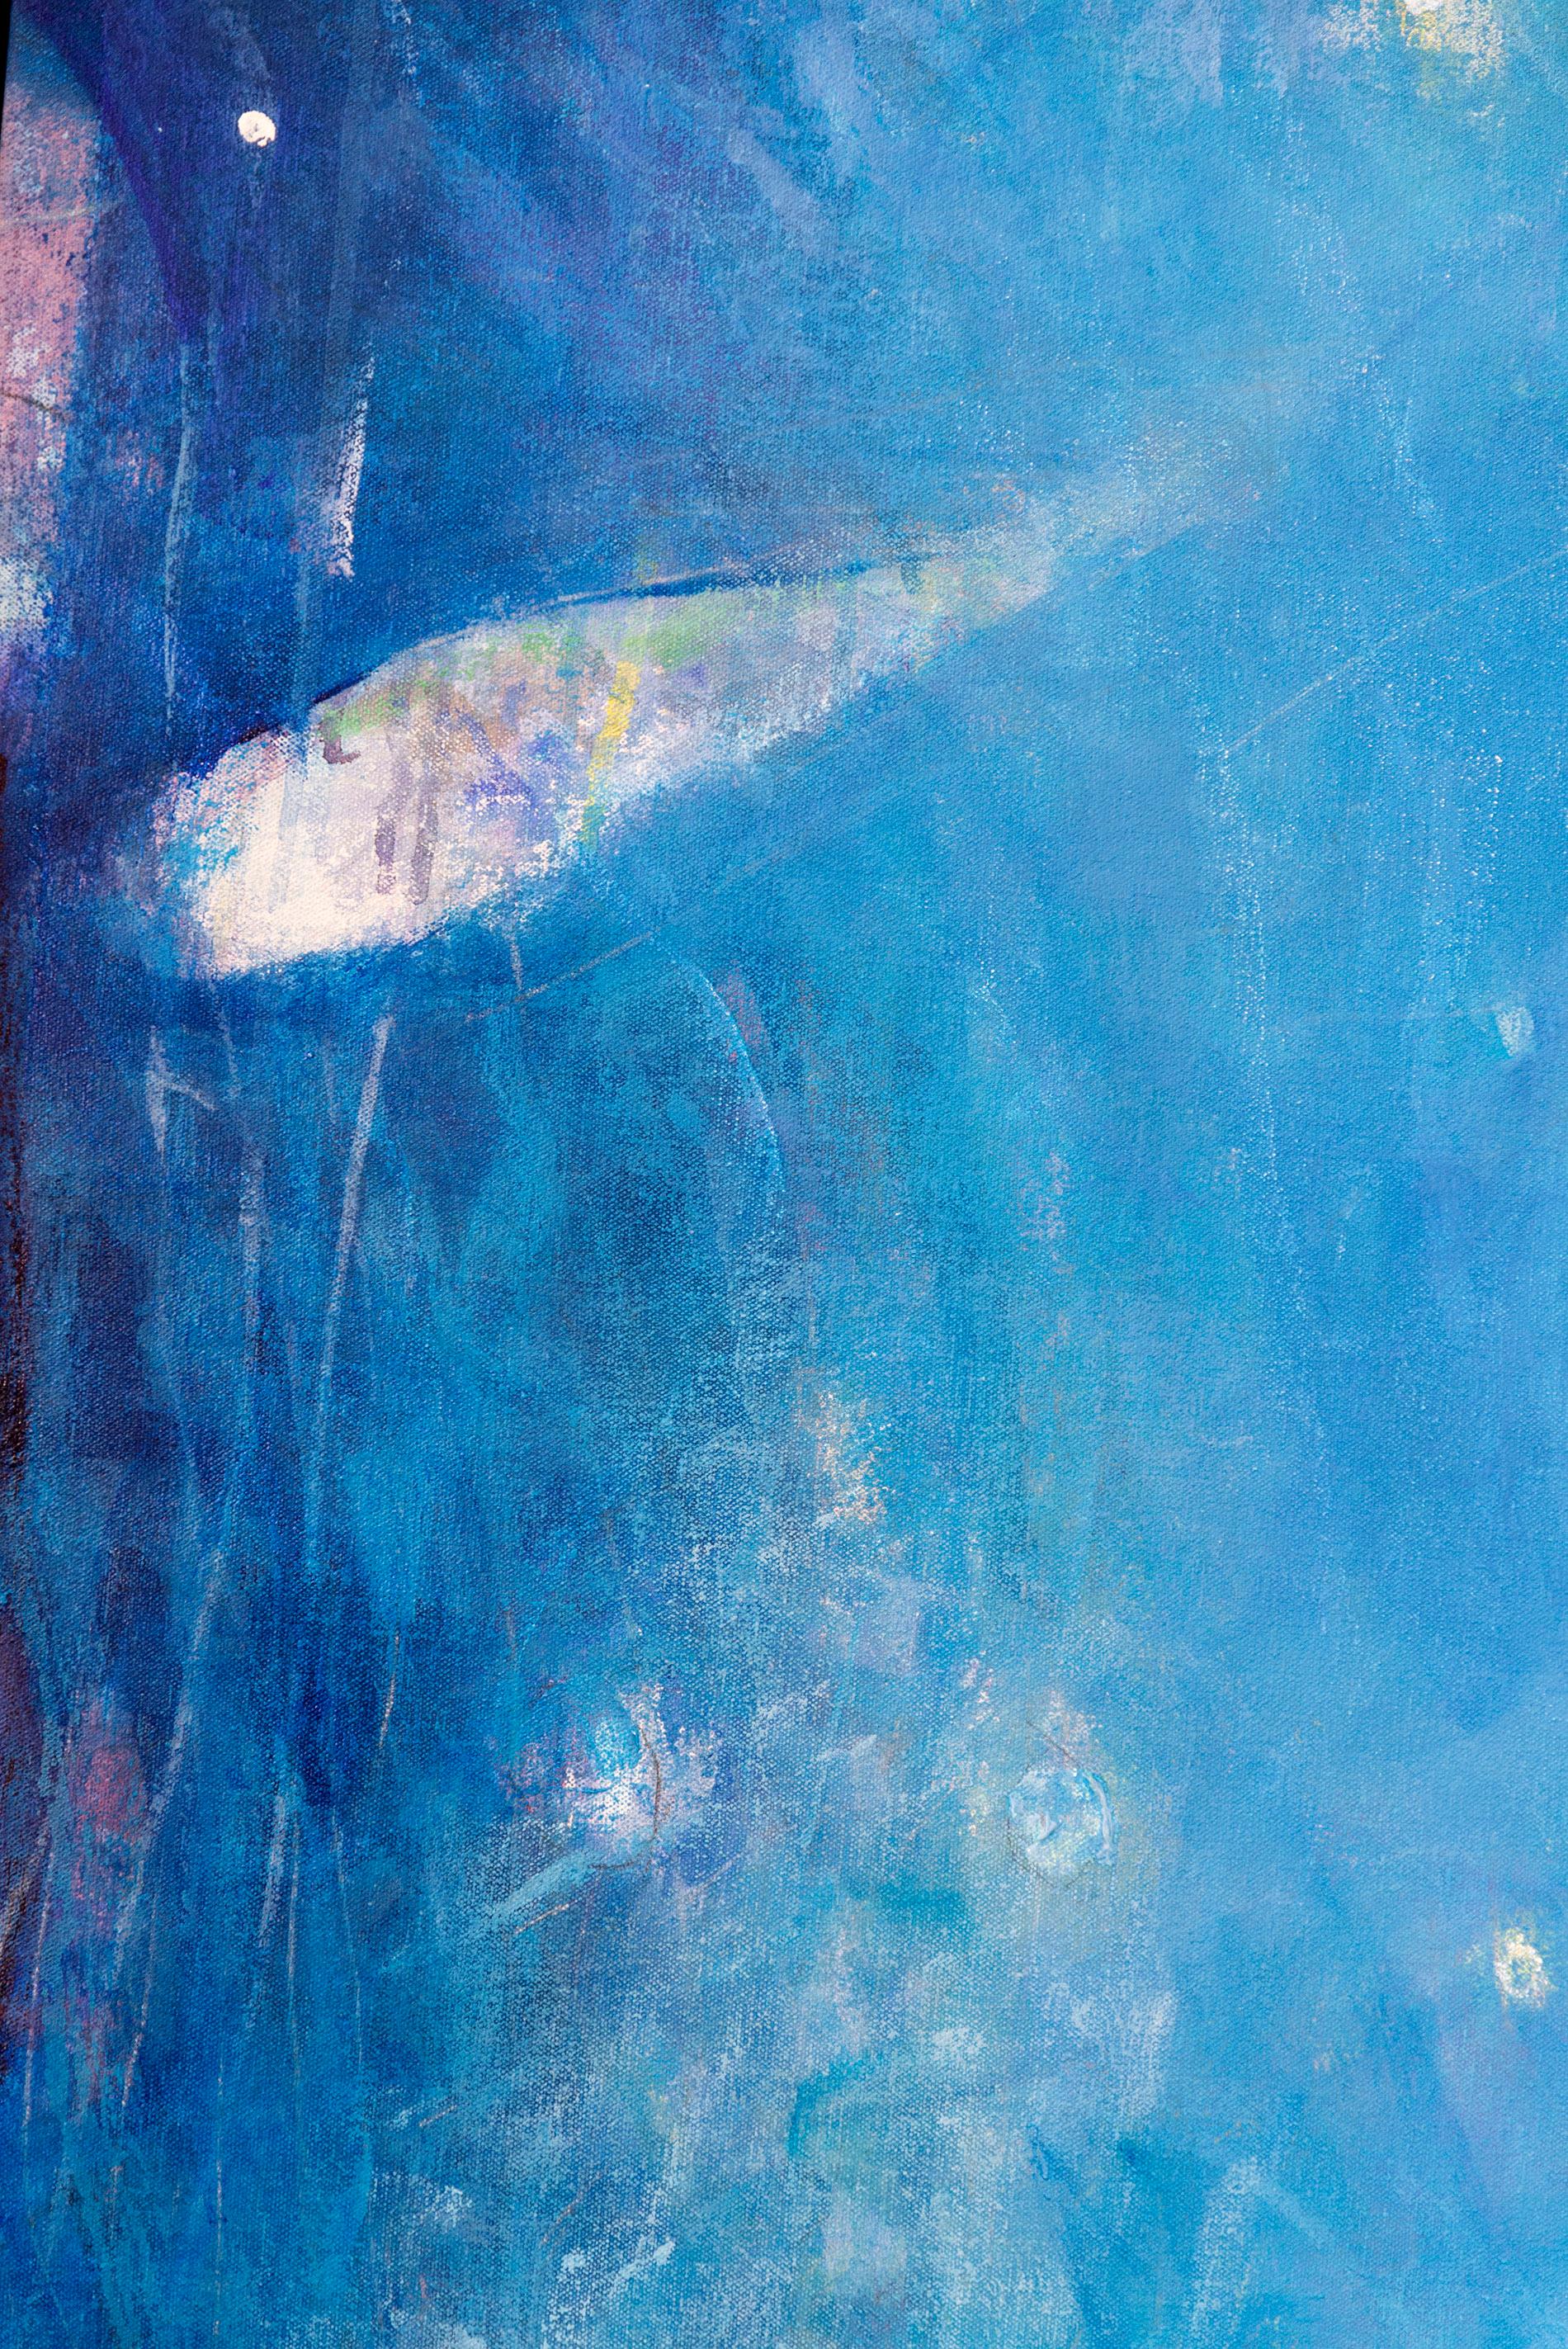 Northwest Passage No 5 - blue, black, indigenous, abstract, acrylic on canvas 1